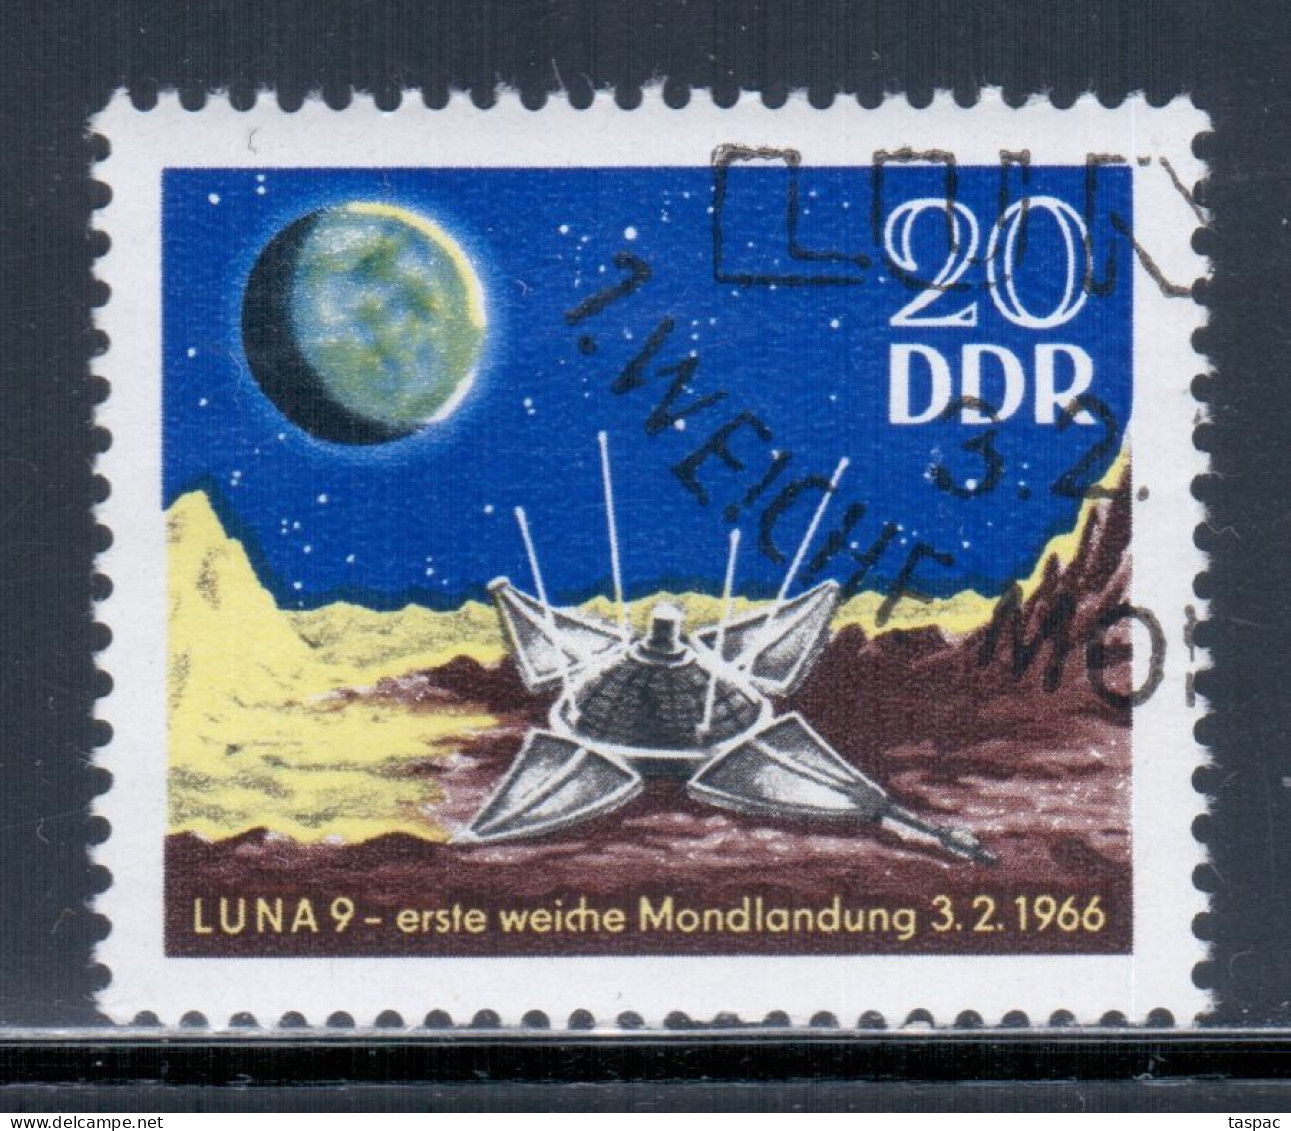 East Germany / DDR 1966 Mi# 1168 Used - Luna 9 On Moon / Space - Europa